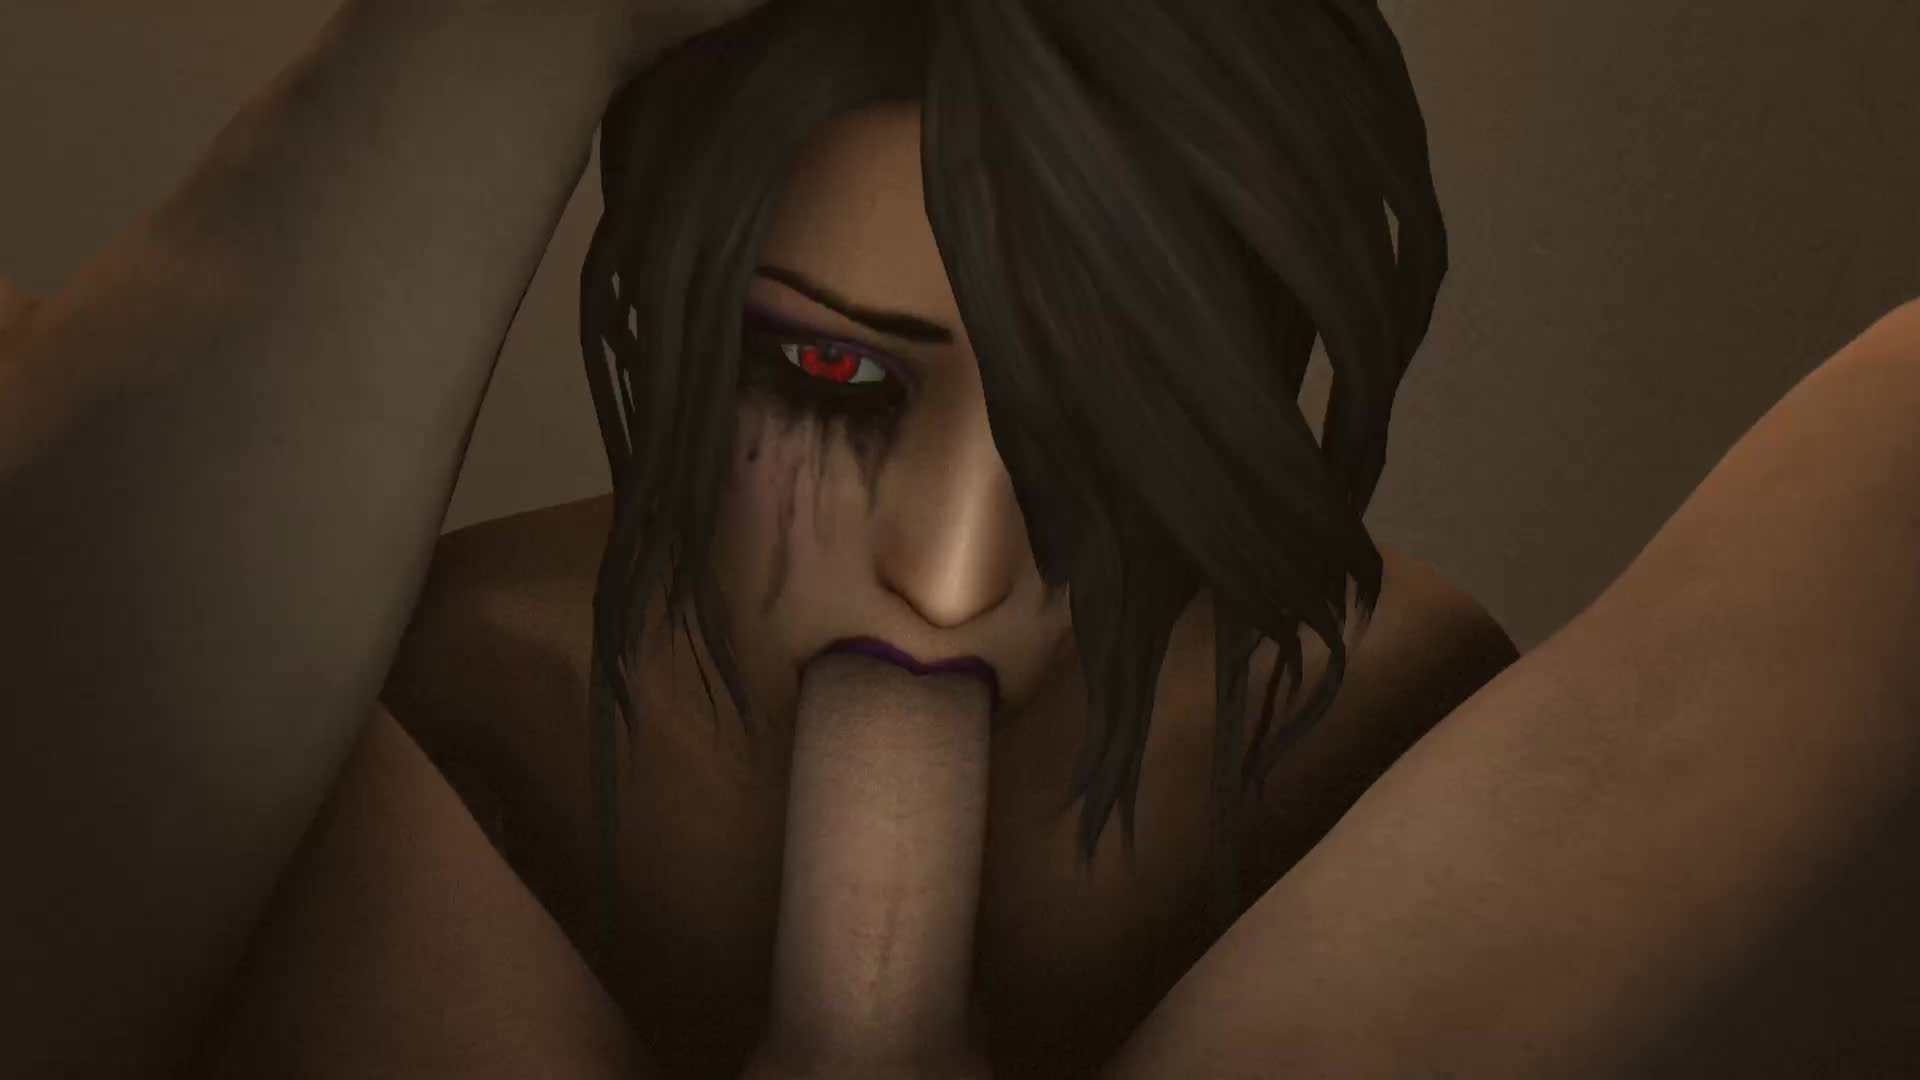 Lulu Gives Deepthroat Blowjob To Big Penis – Final Fantasy NSFW animation thumbnail